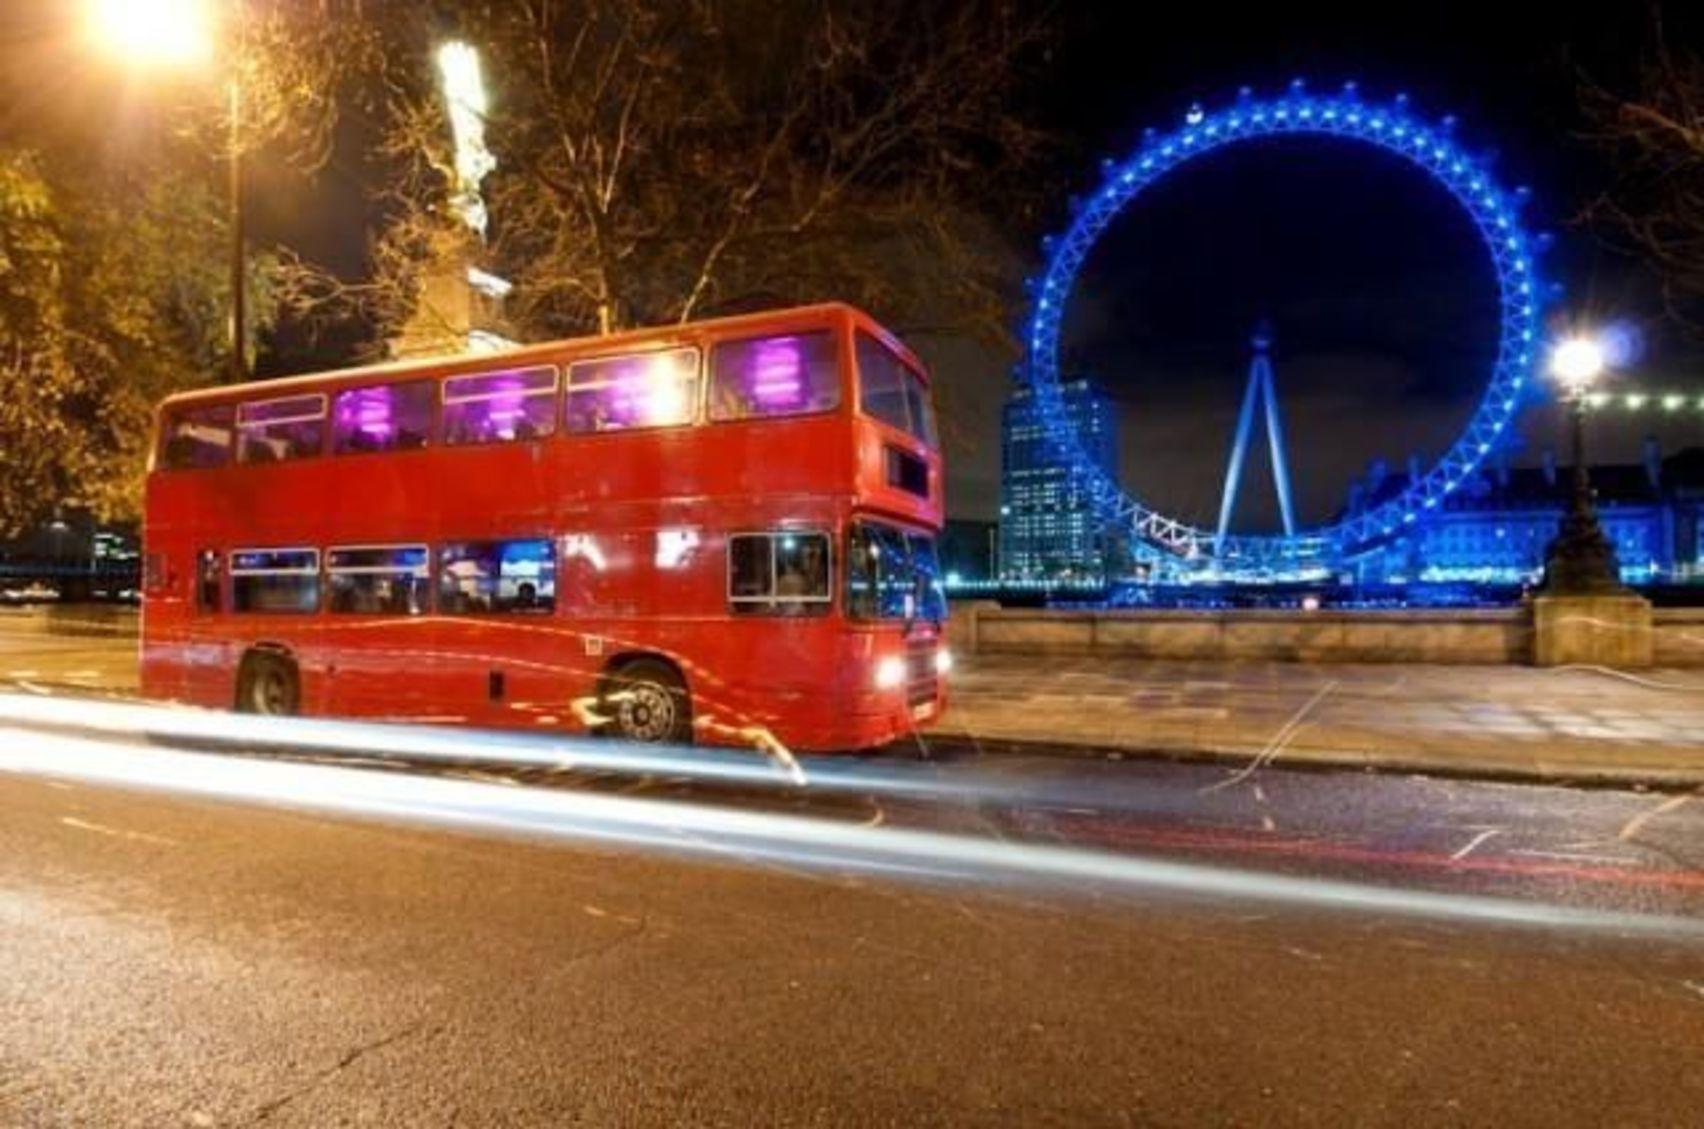 The Red Double Decker, London Party Bus Tour photo #1